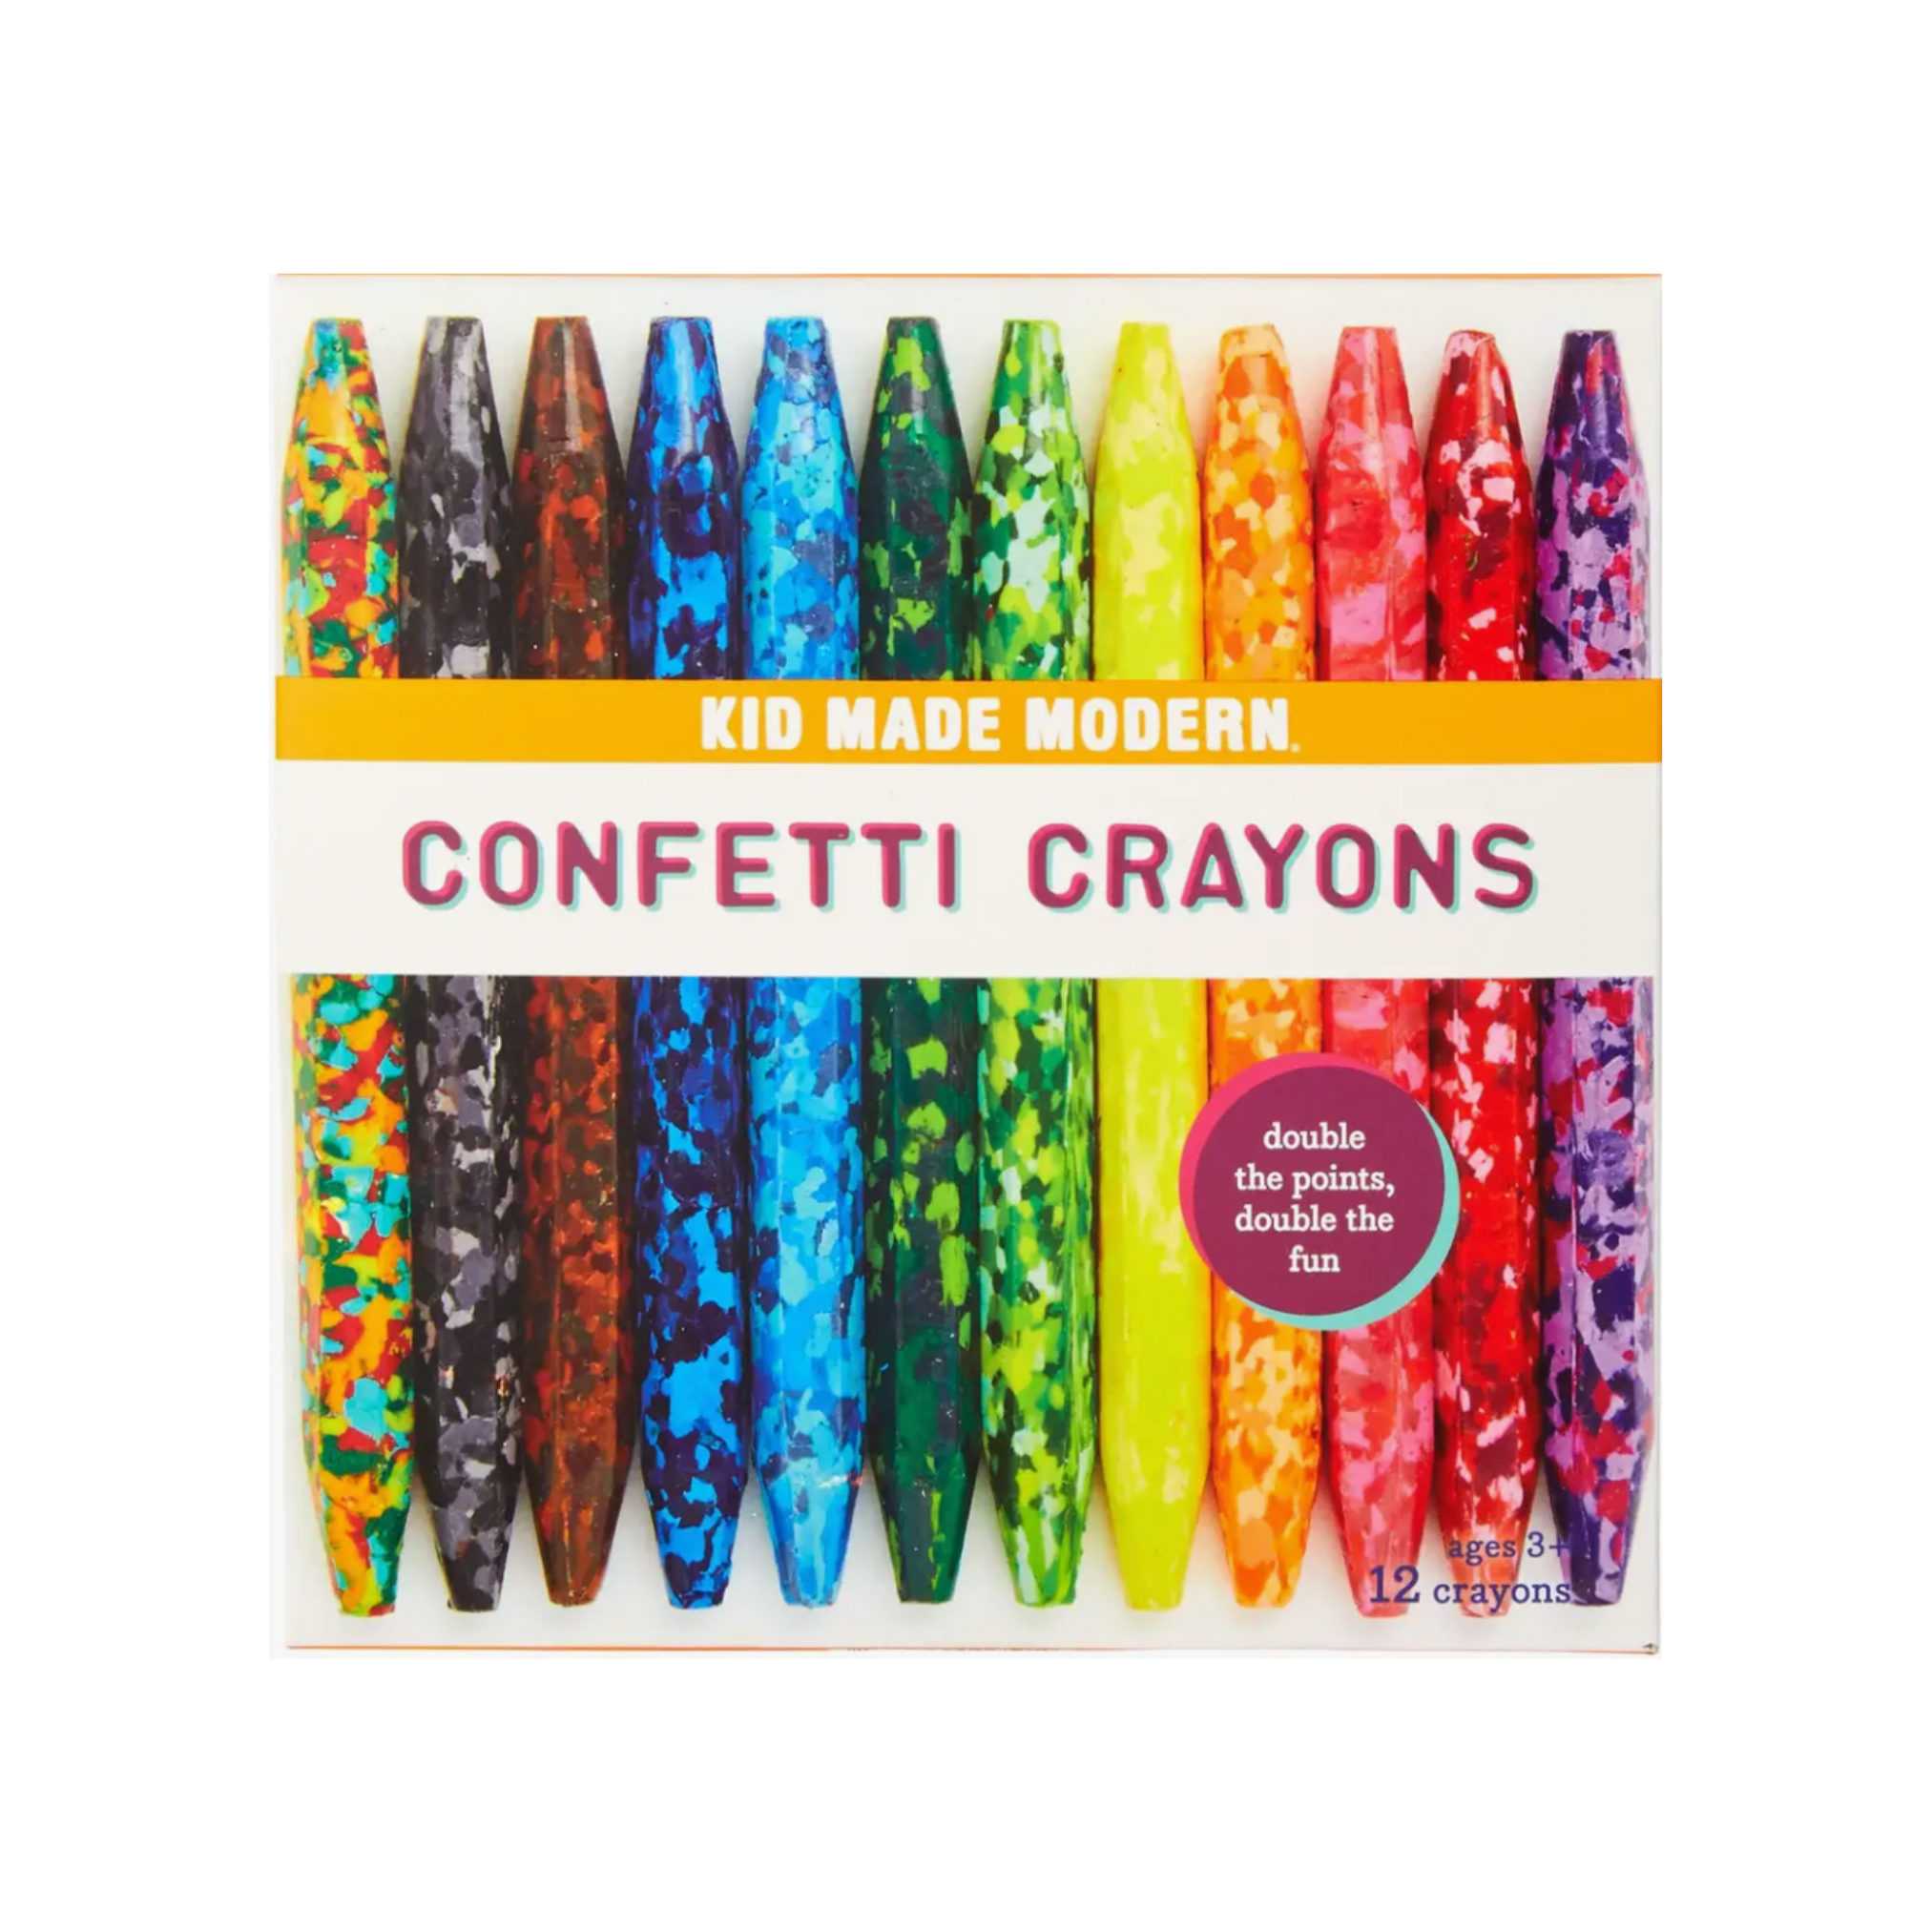 OMY Gel Crayons